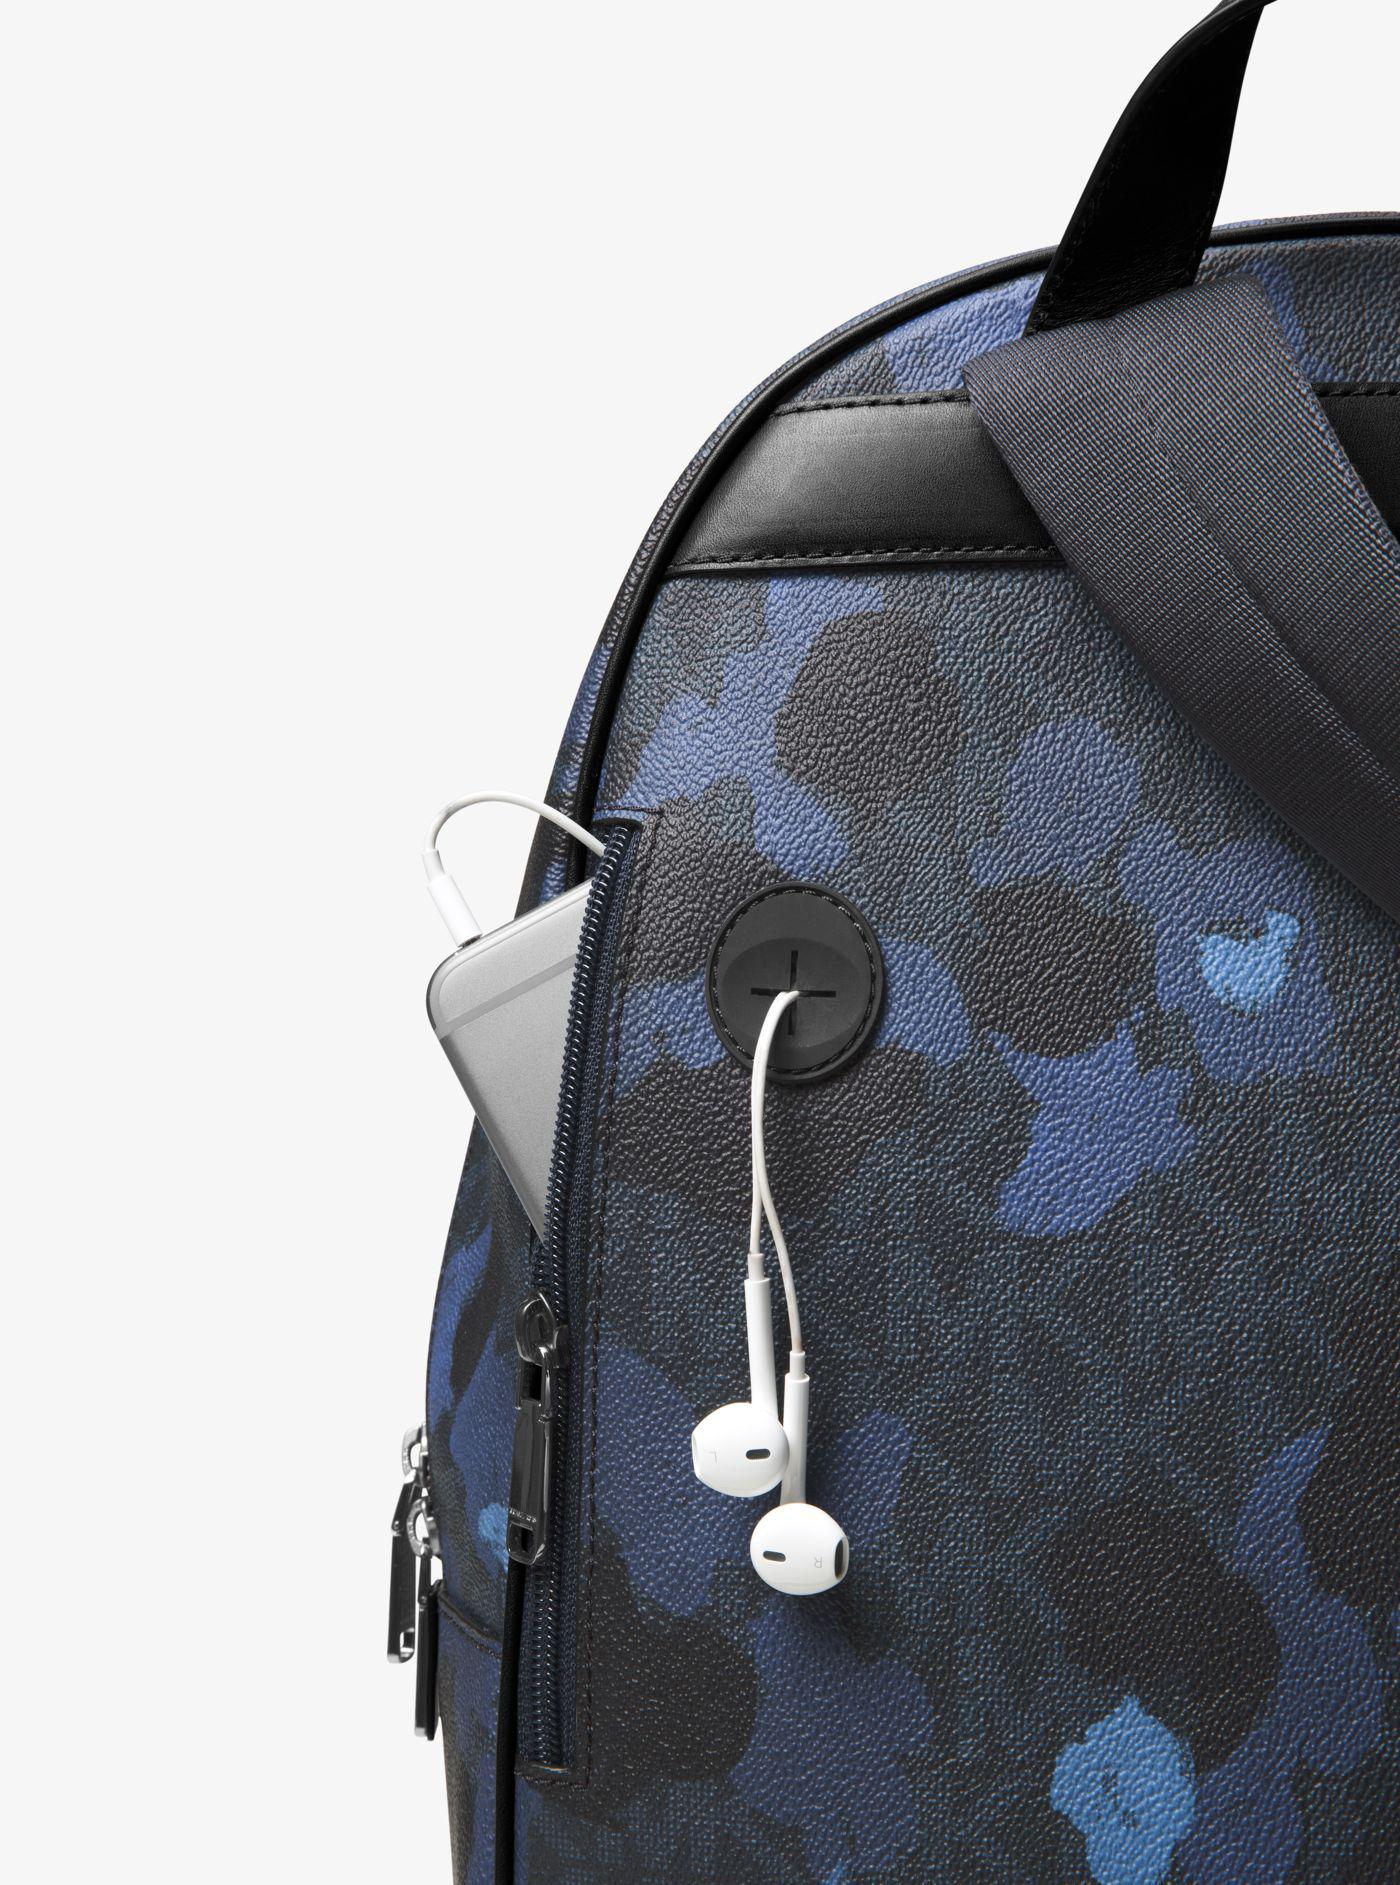 michael kors backpack blue camo